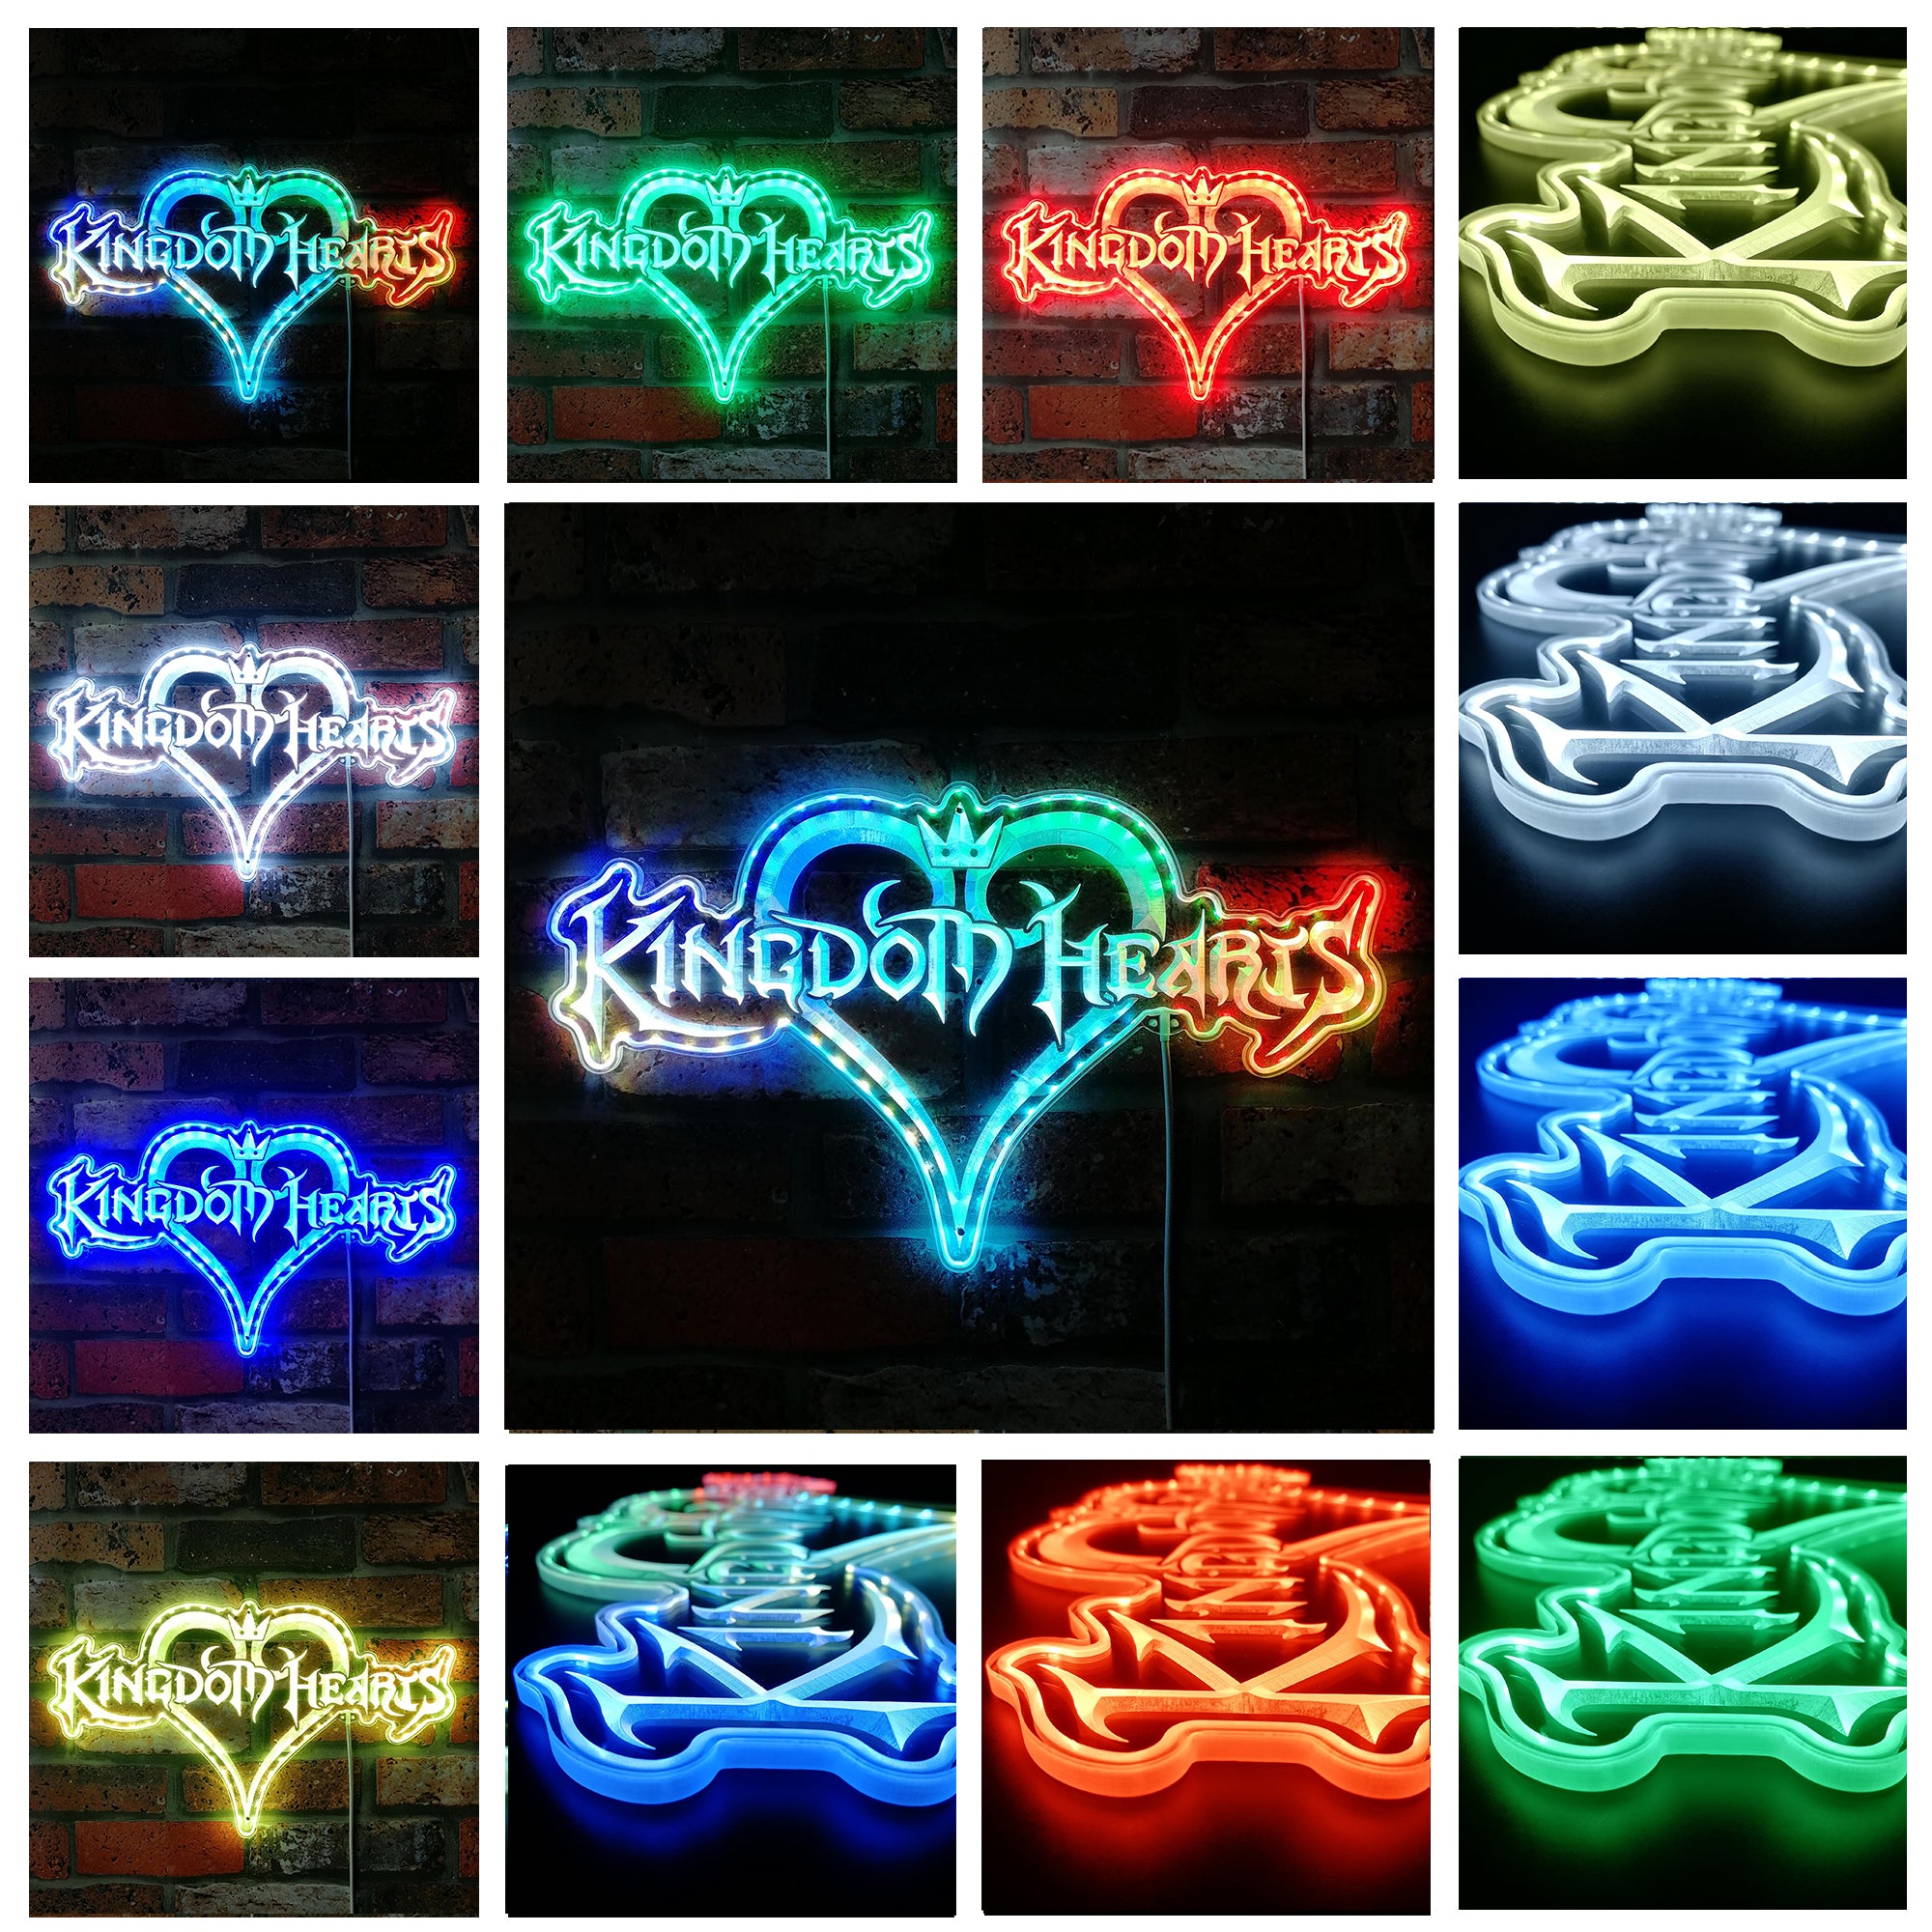 Kingdom Hearts Dynamic RGB Edge Lit LED Sign